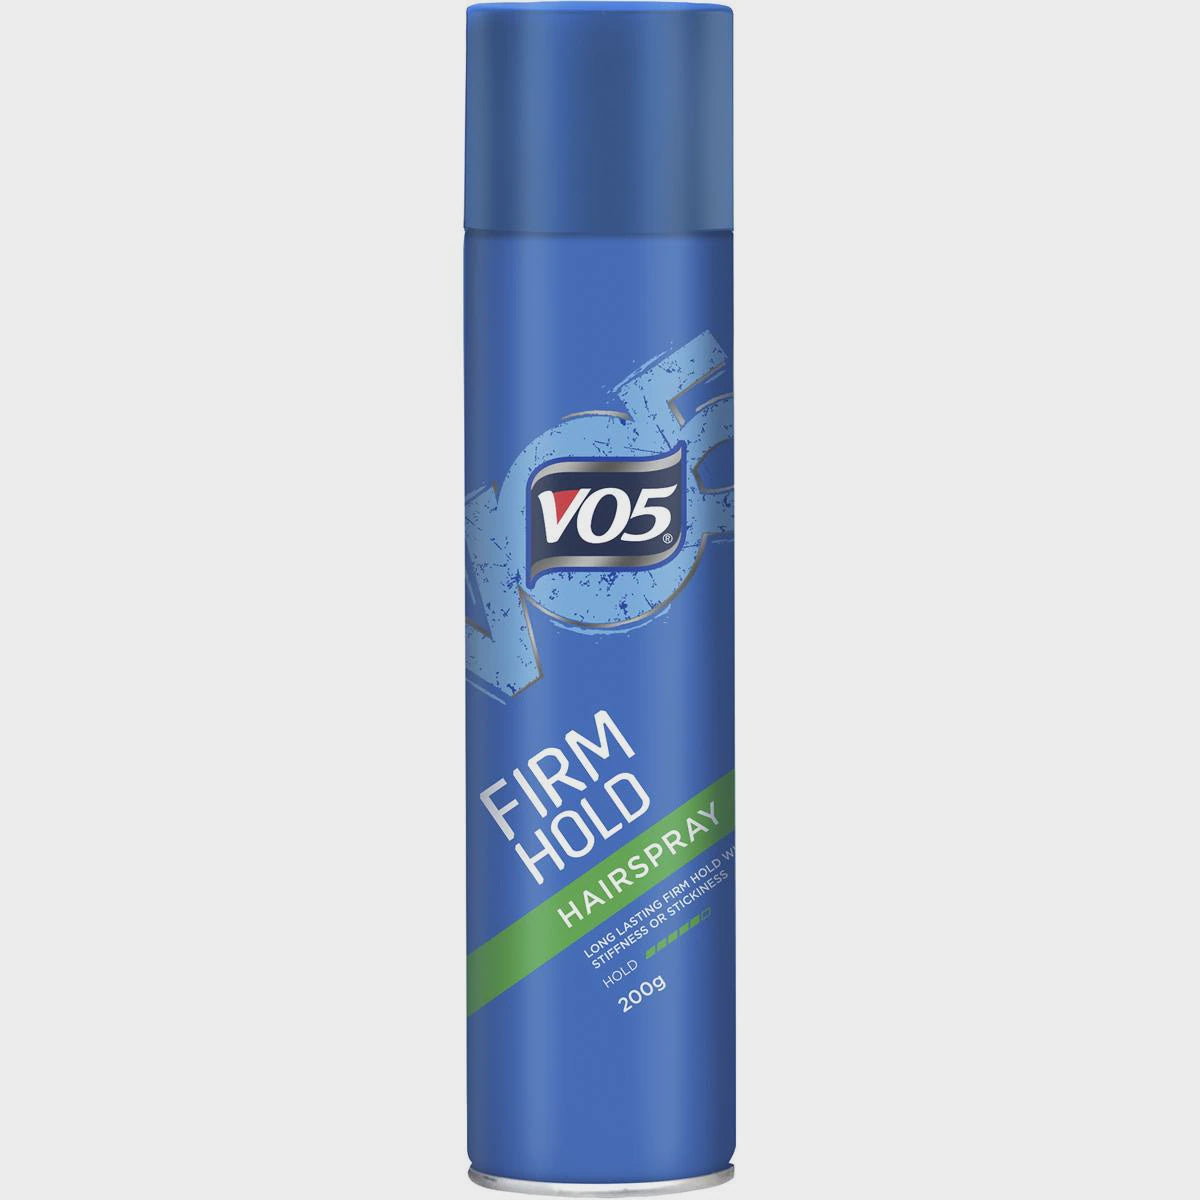 Vo5 Hairspray Firm Hold 200g